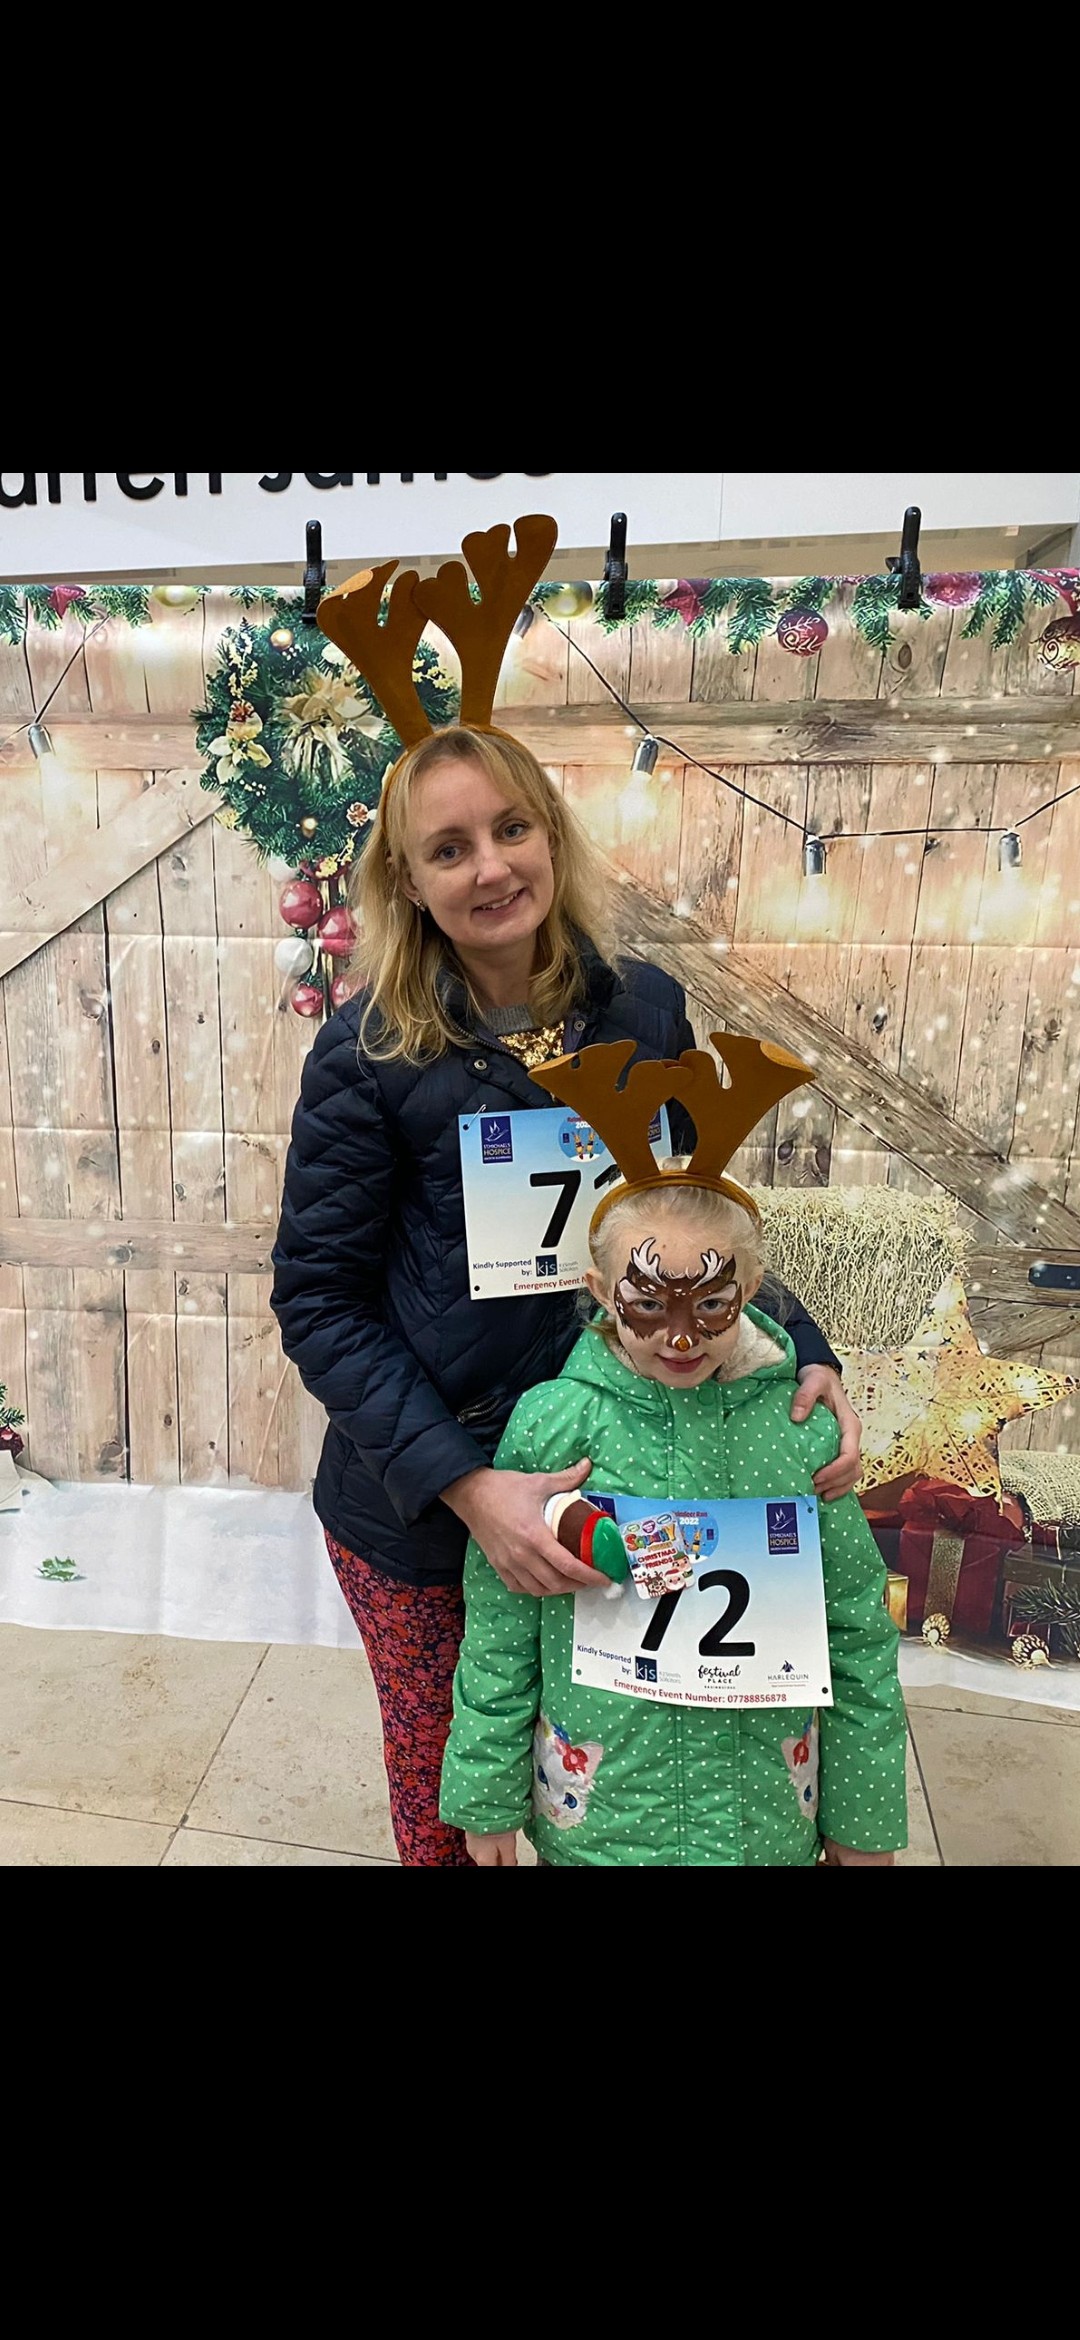 image of Charlotte and her daughter wearing reindeer antlers at the reindeer run